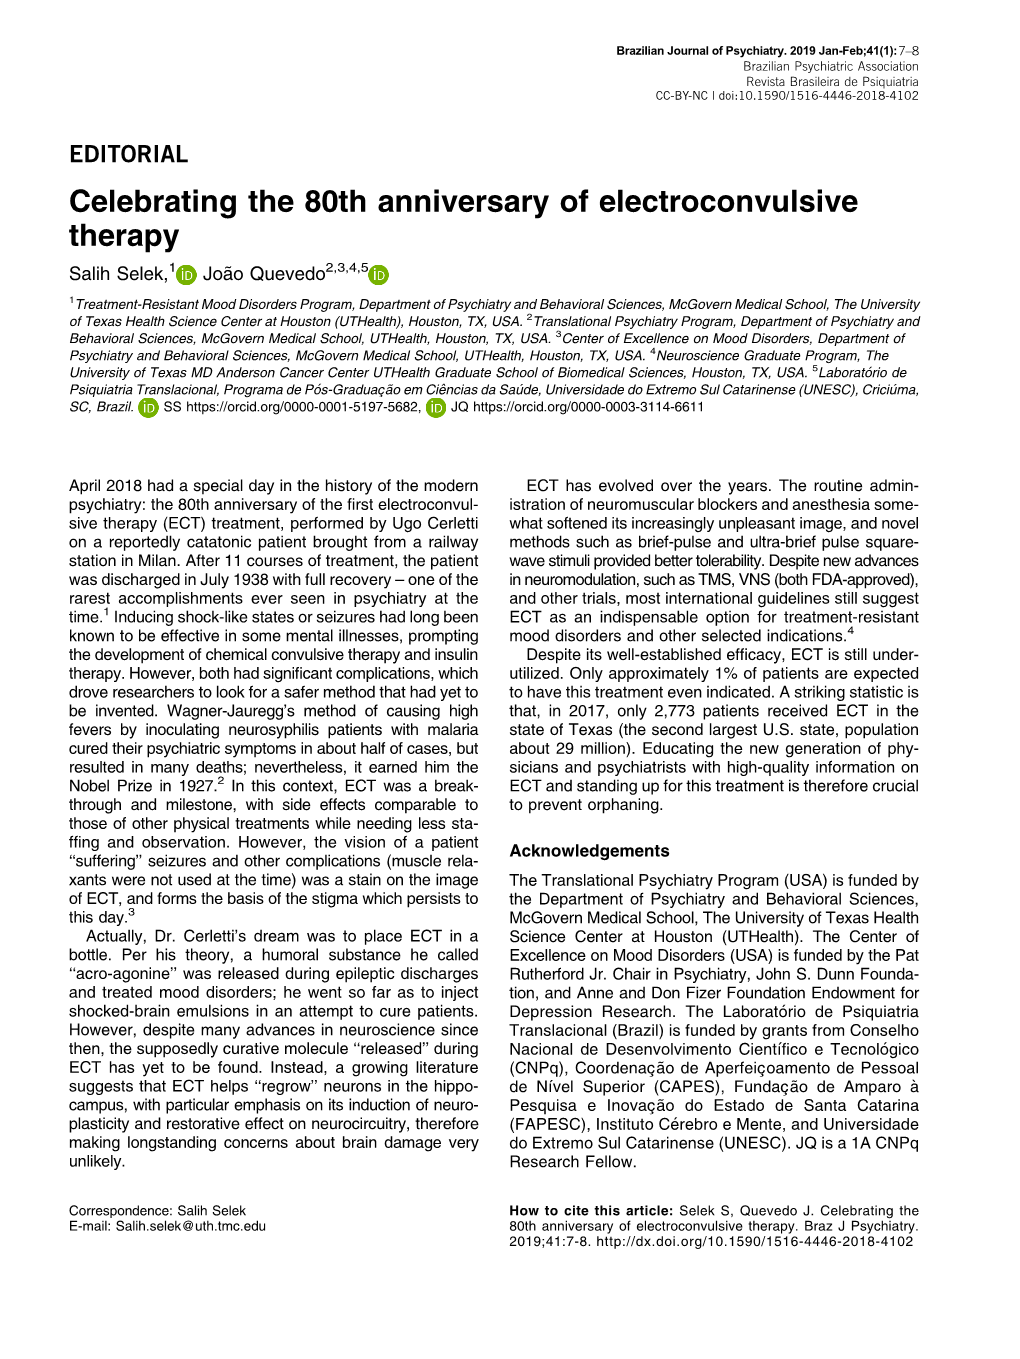 Celebrating the 80Th Anniversary of Electroconvulsive Therapy Salih Selek,1 Joa˜O Quevedo2,3,4,5